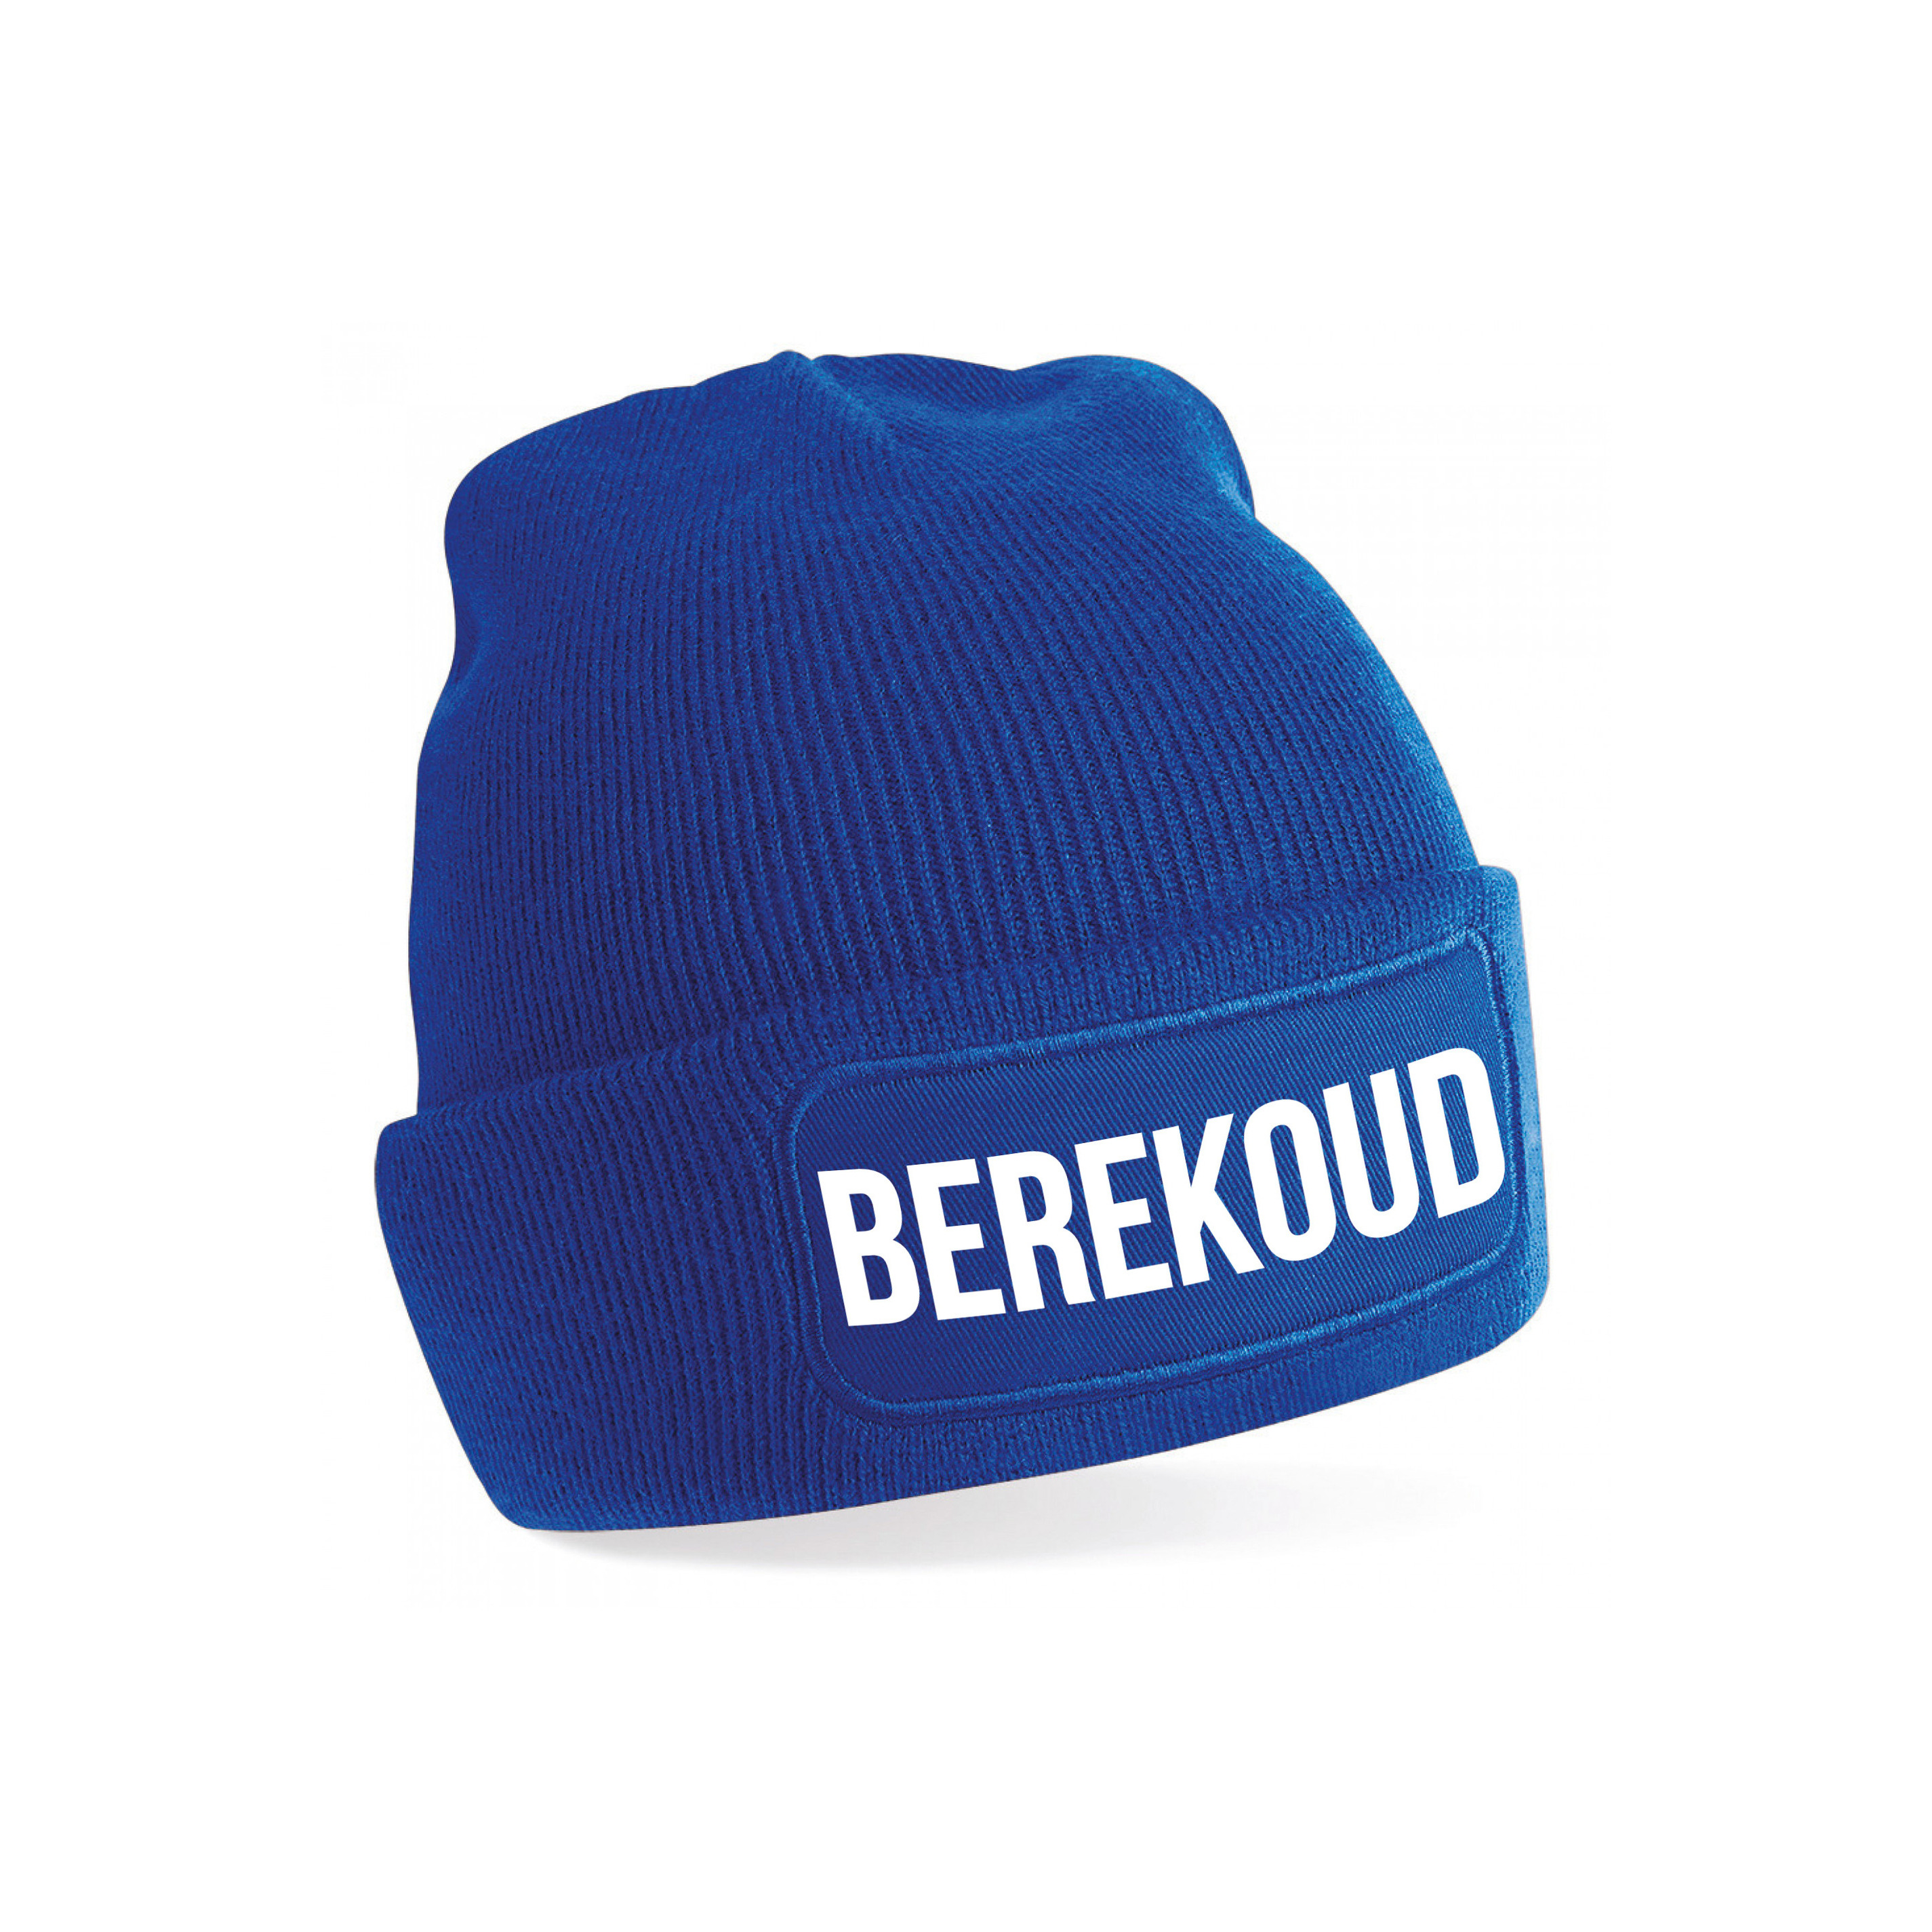 Berekoud muts - unisex - one size - blauw - apres-ski muts One size -